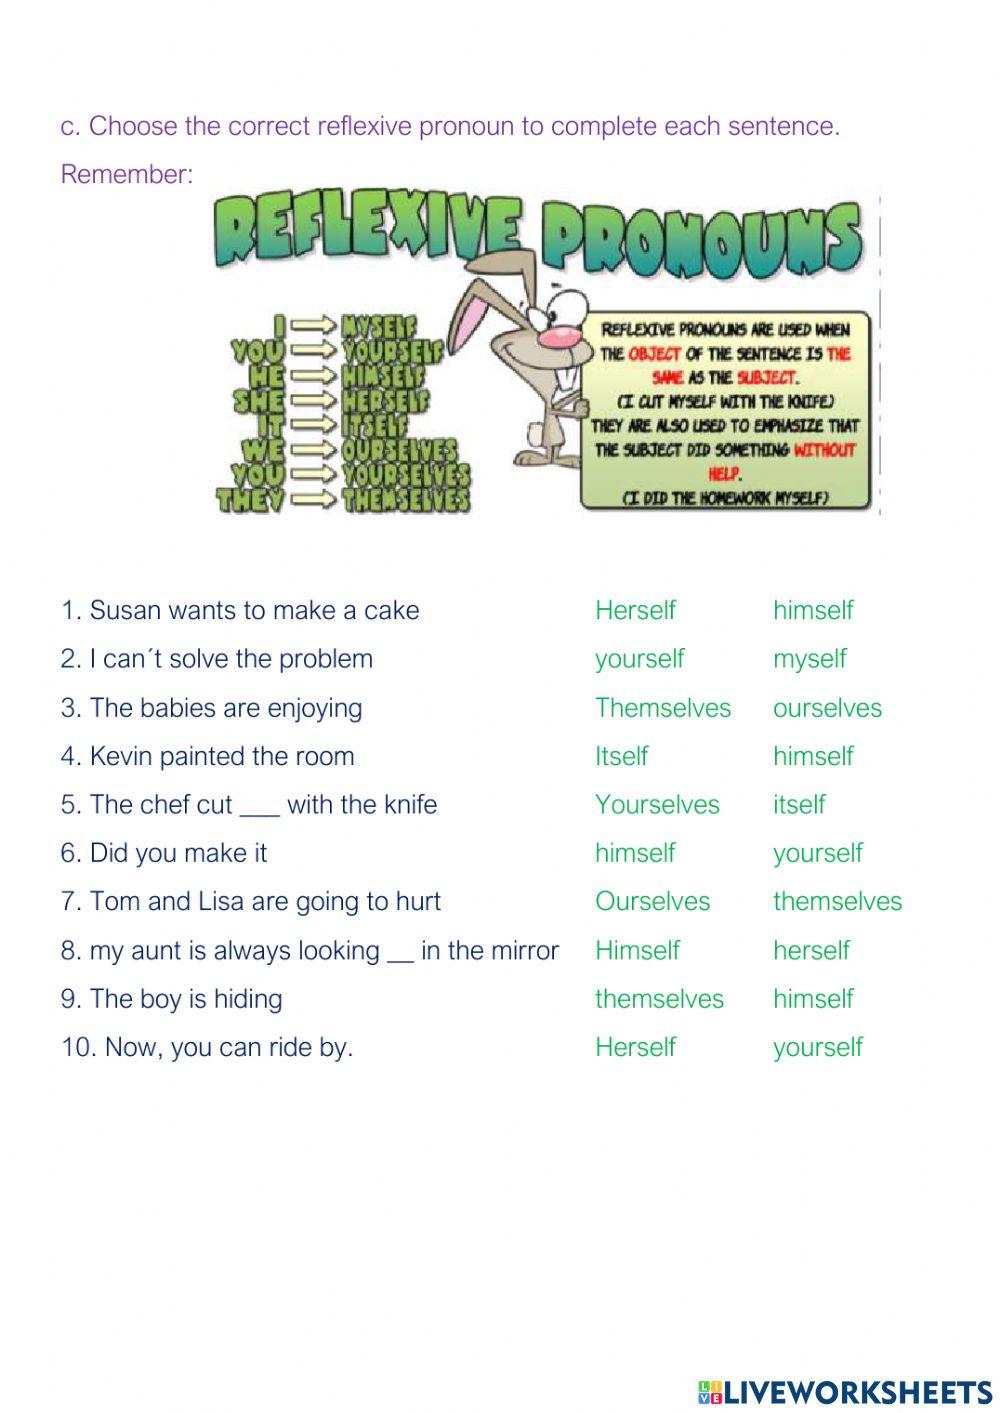 Grammar study guide 5th. part 1